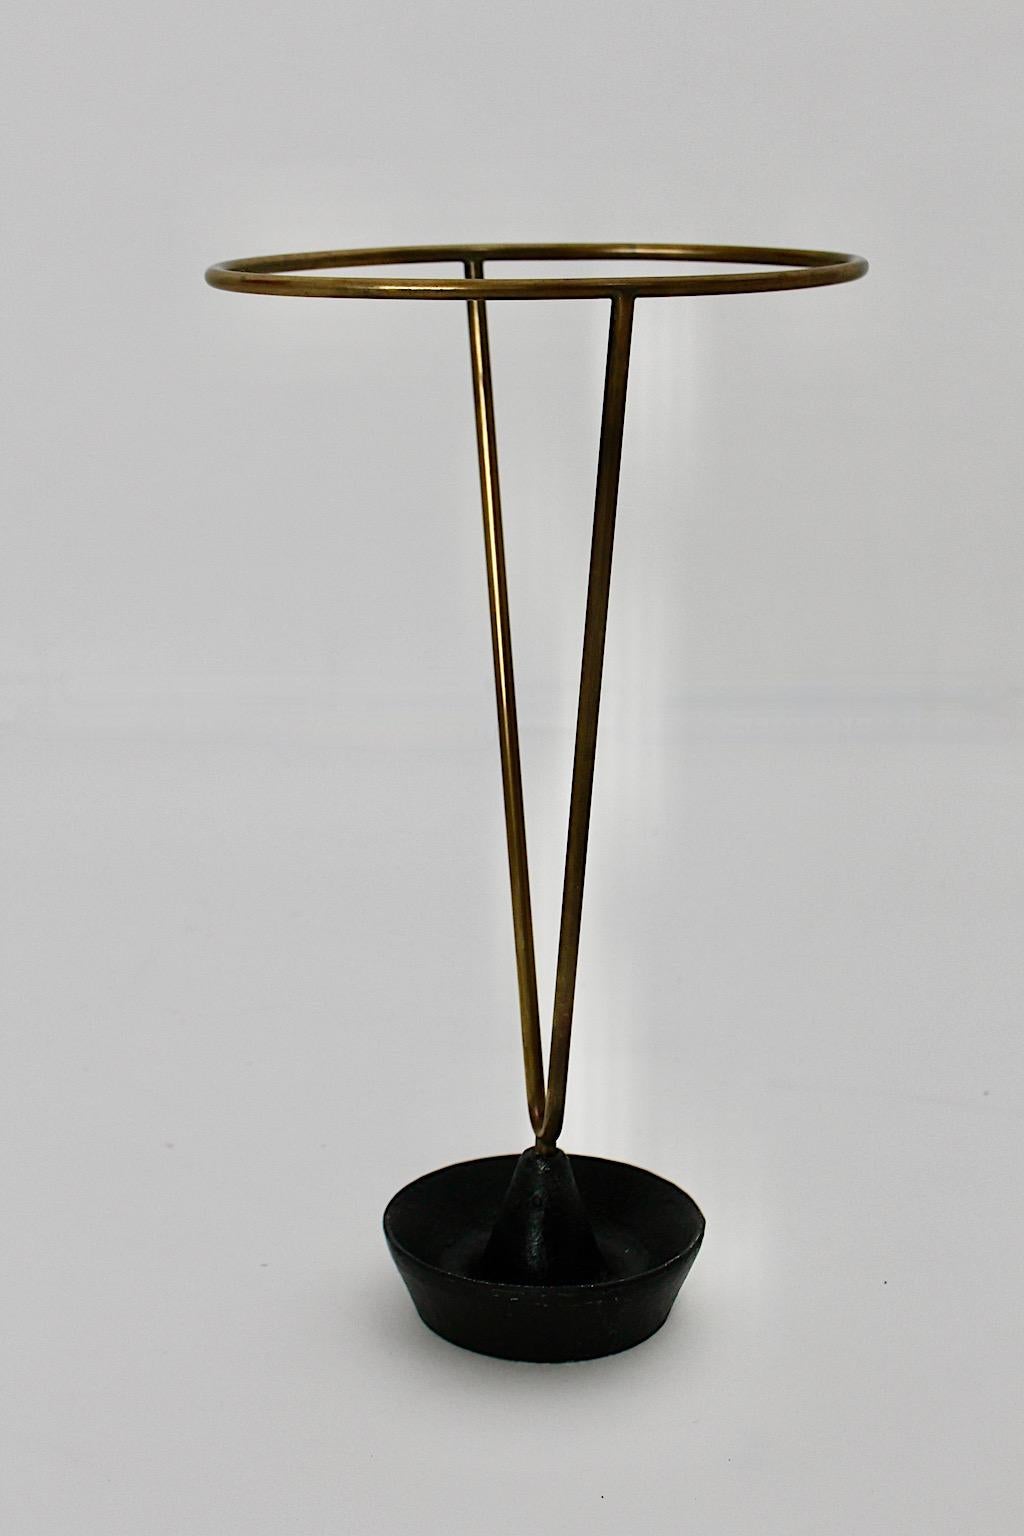 Cast Carl Auböck Mid Century Vintage Black Brass Umbrella Stand Cane Holder 1950s For Sale